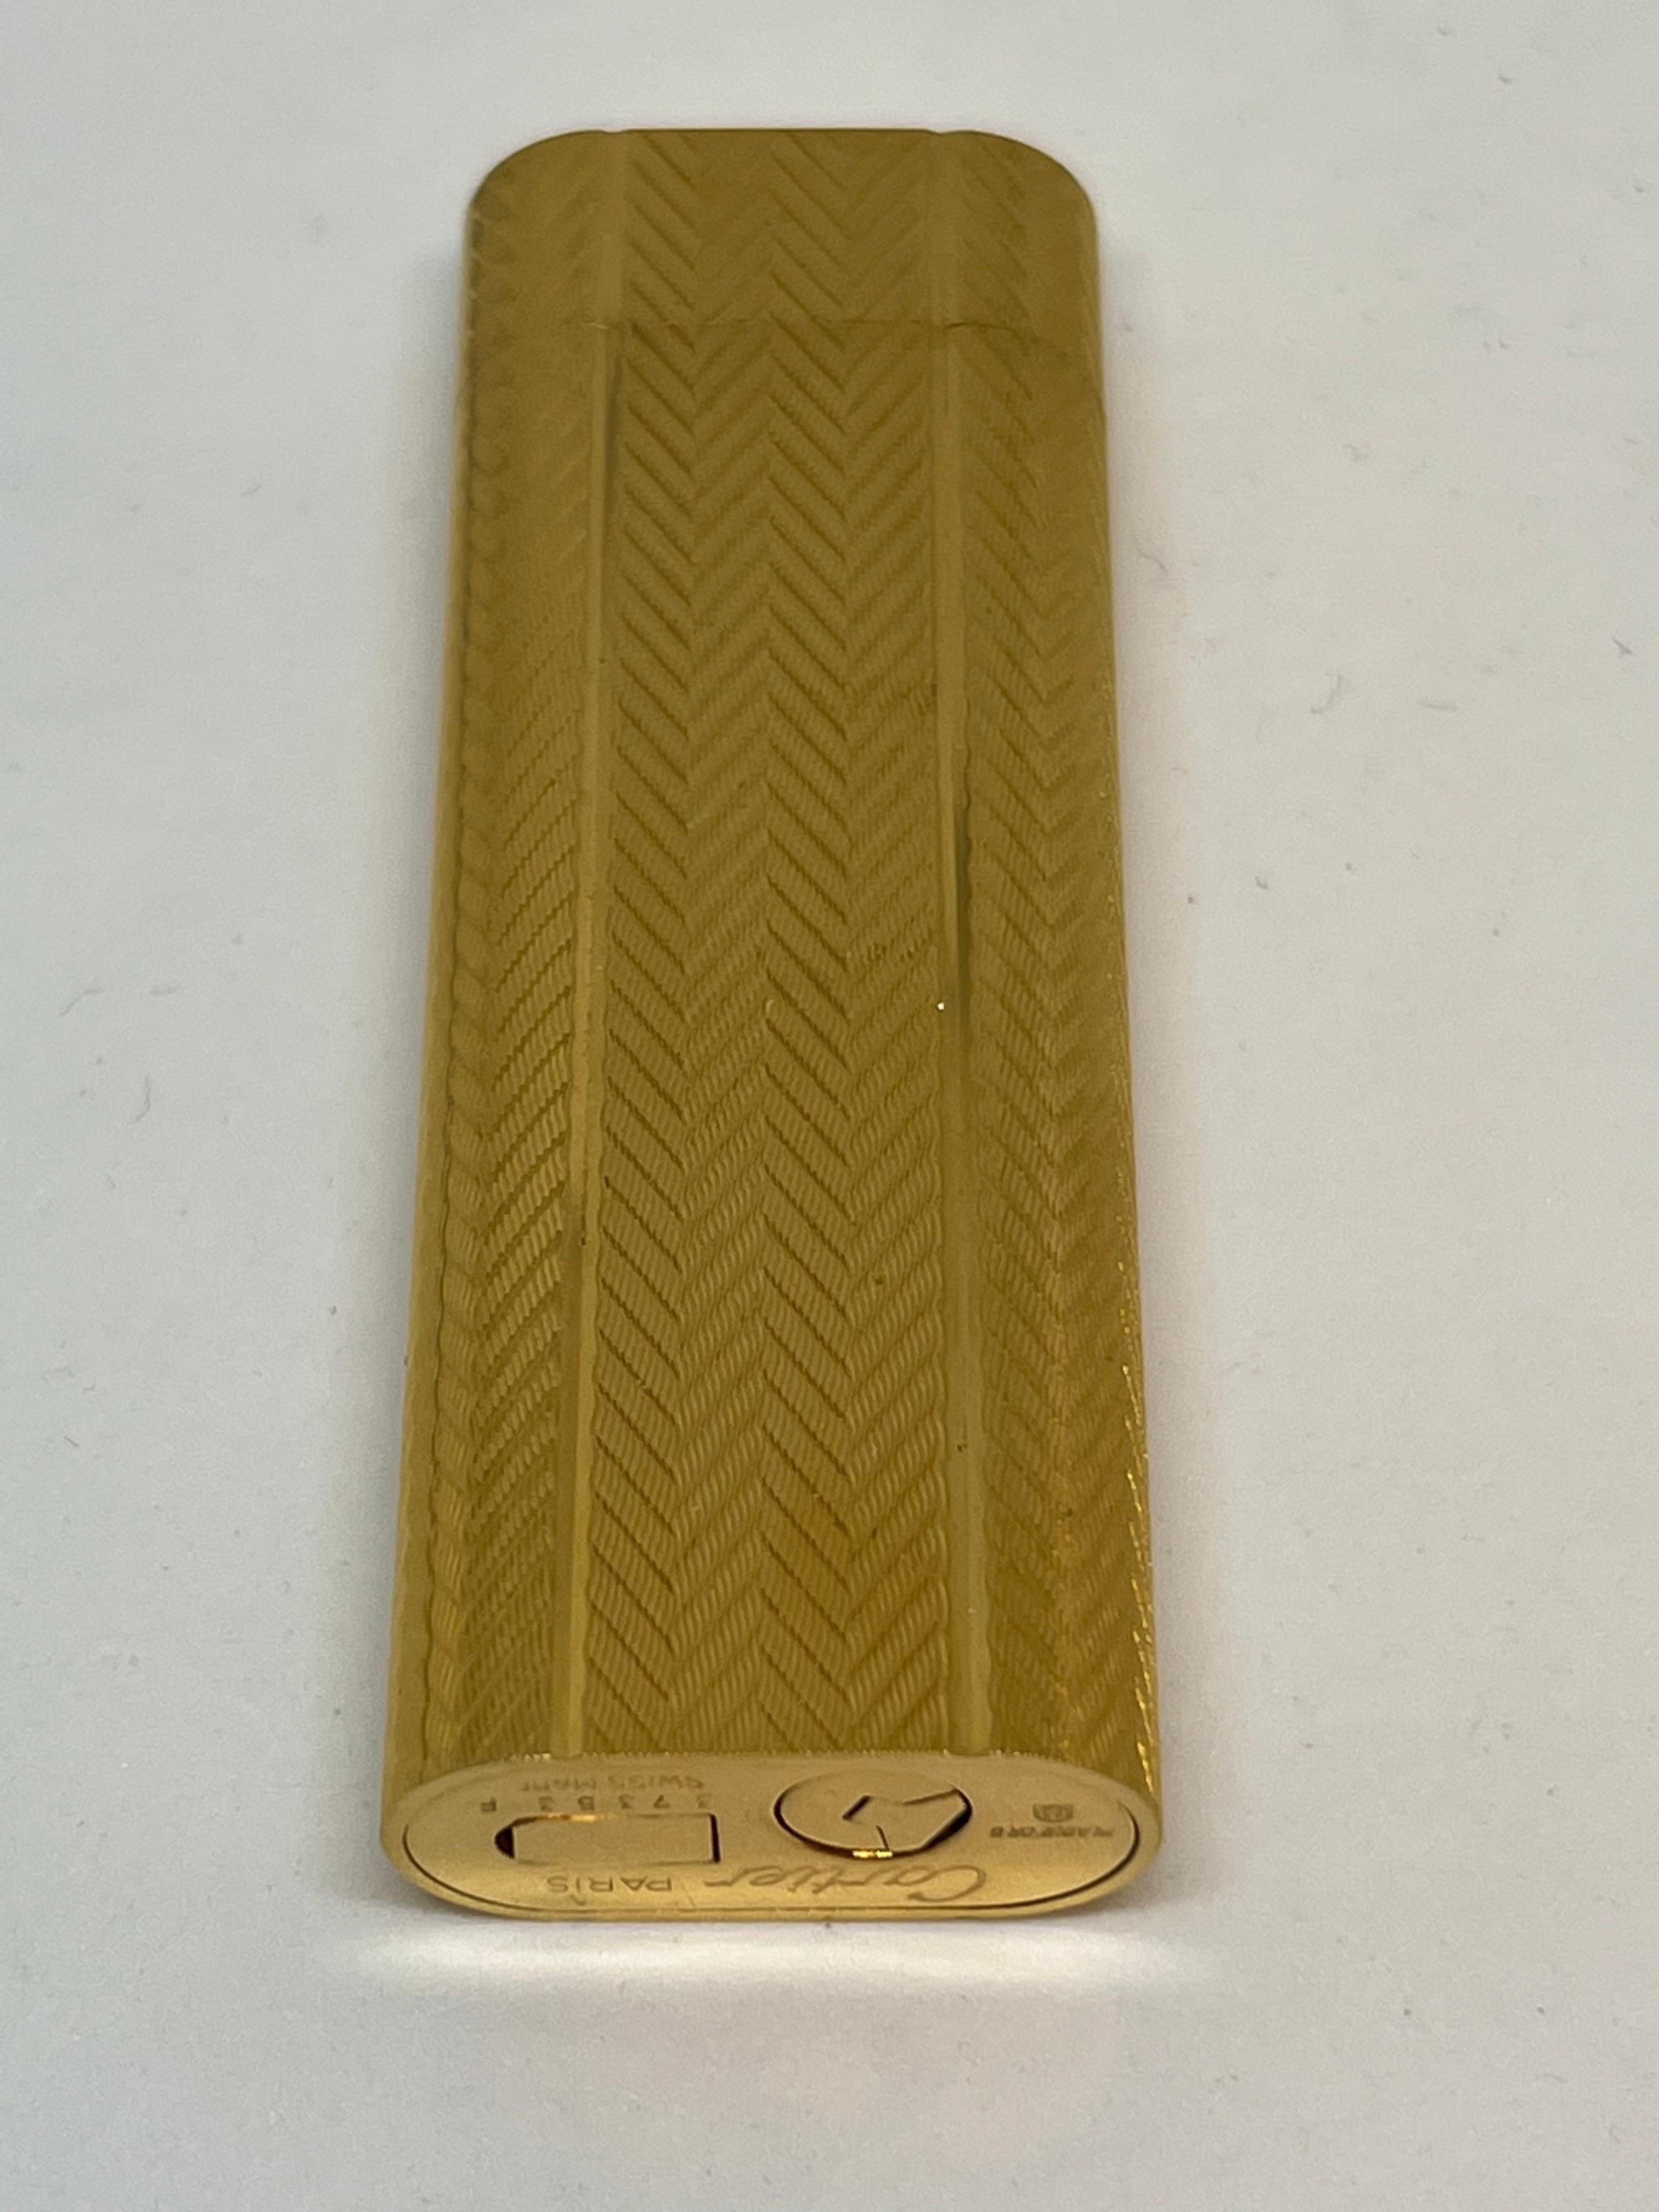 A Les Must De Cartier Paris 18k gold plated lighter 8